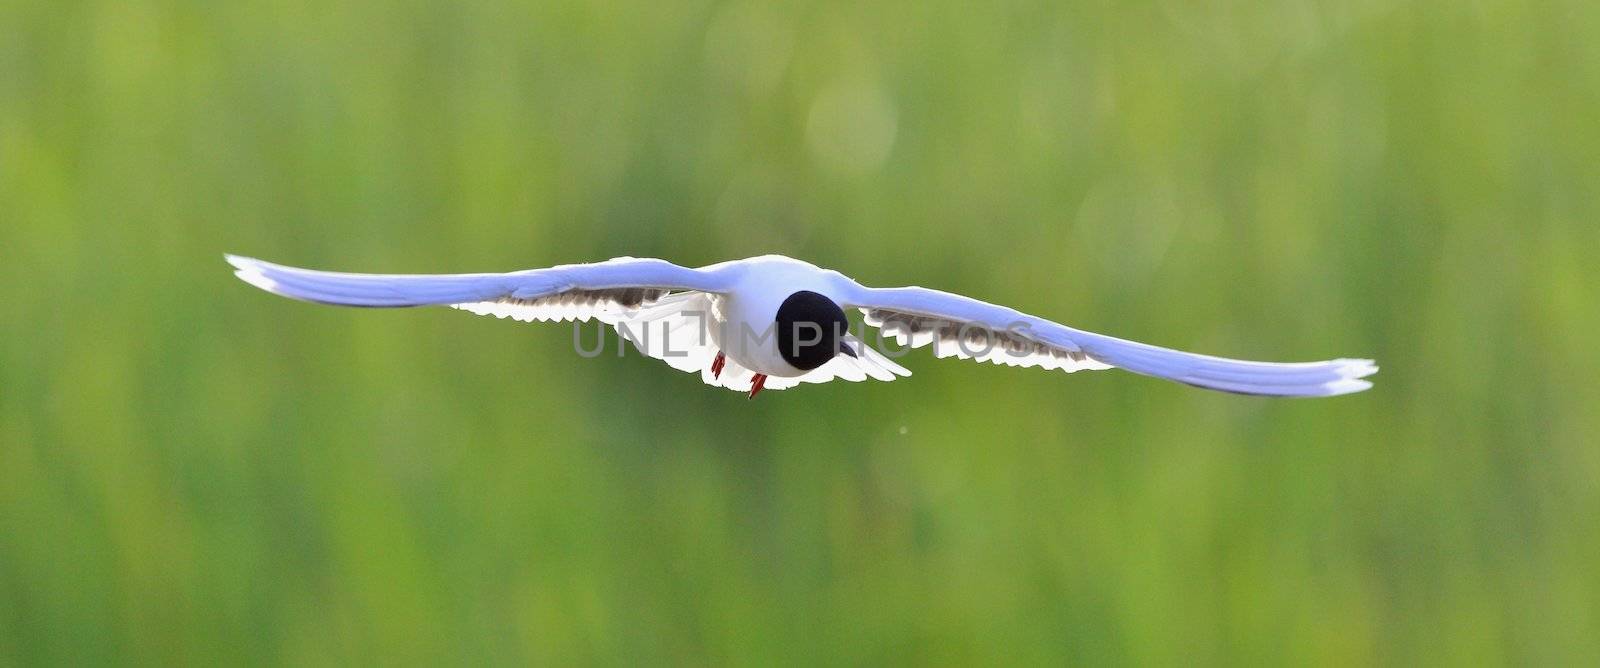 Black-headed Gull (Larus ridibundus) in flight on the green grass background. Front